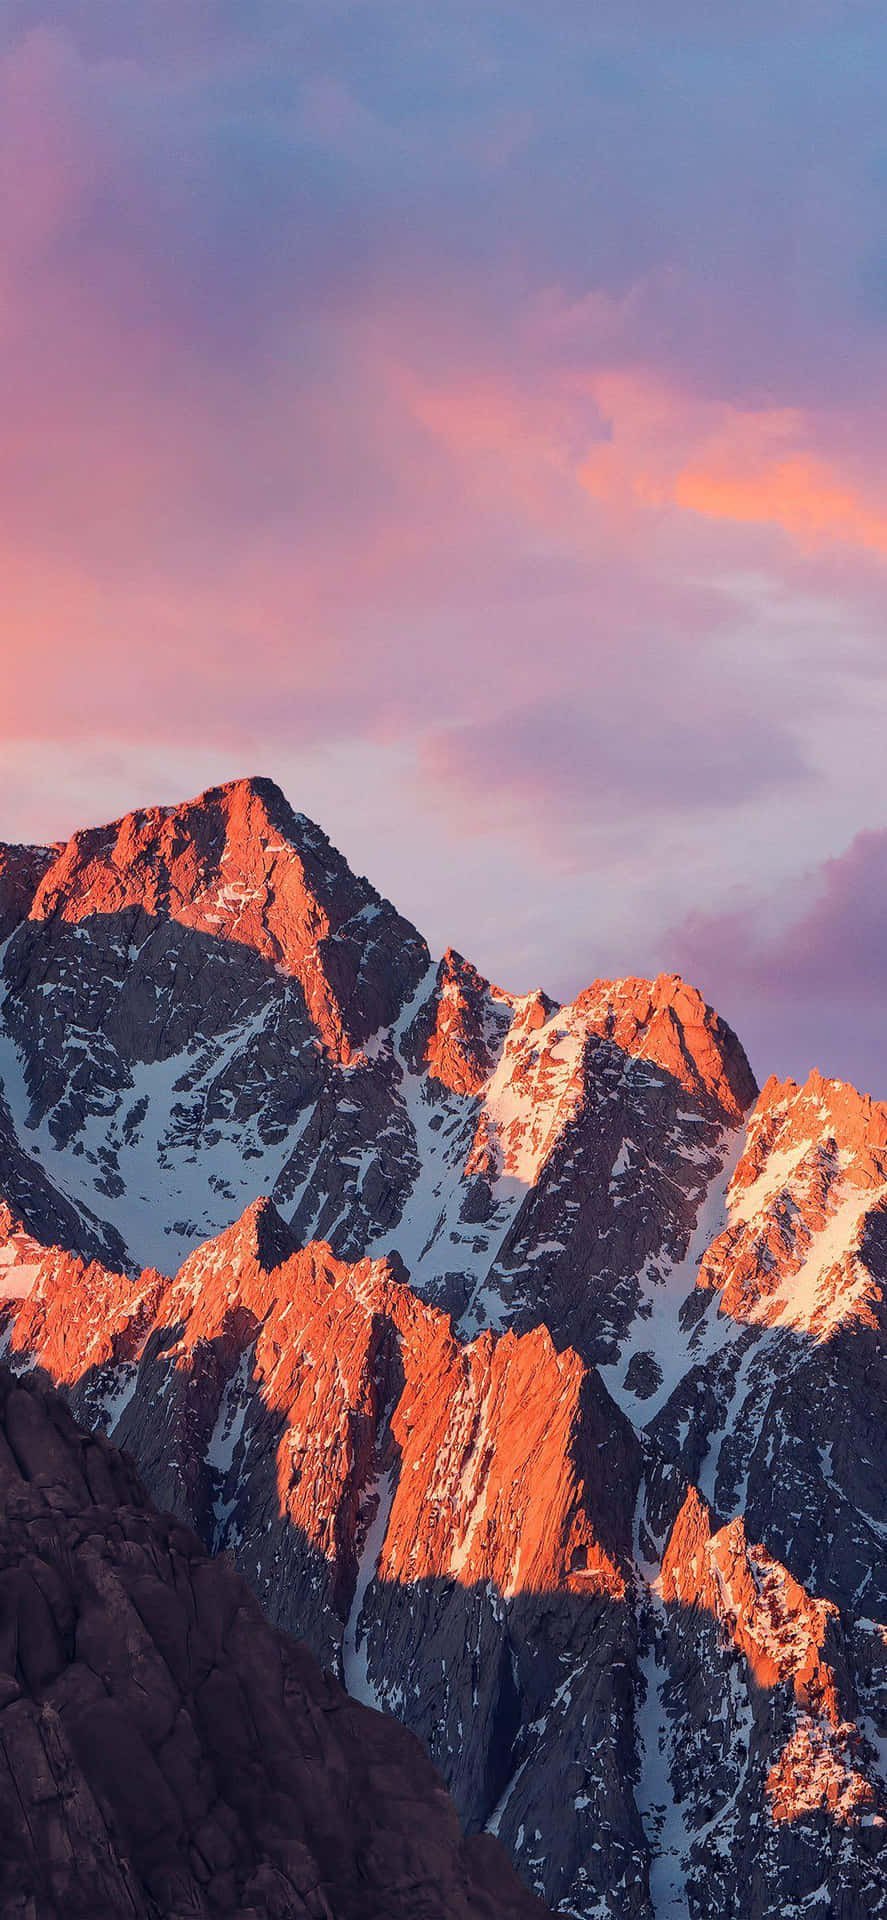 Serene Mountain Landscape on iPhone X